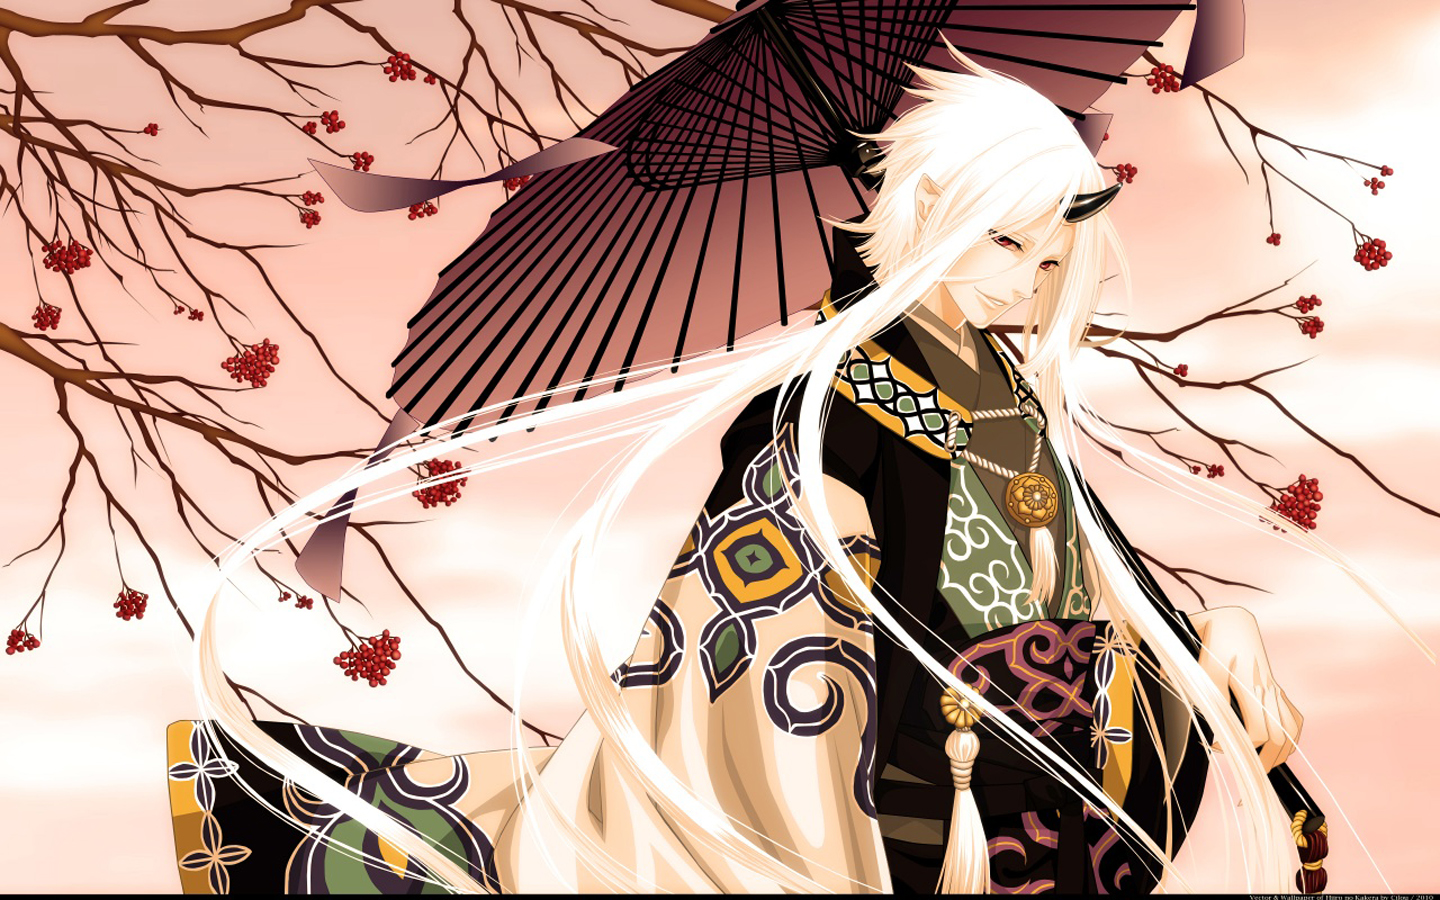 kimono+horn+umbrella+cute+guy+tree+hd+wallpaper+%5Banimefullfights.com%5D.jpg